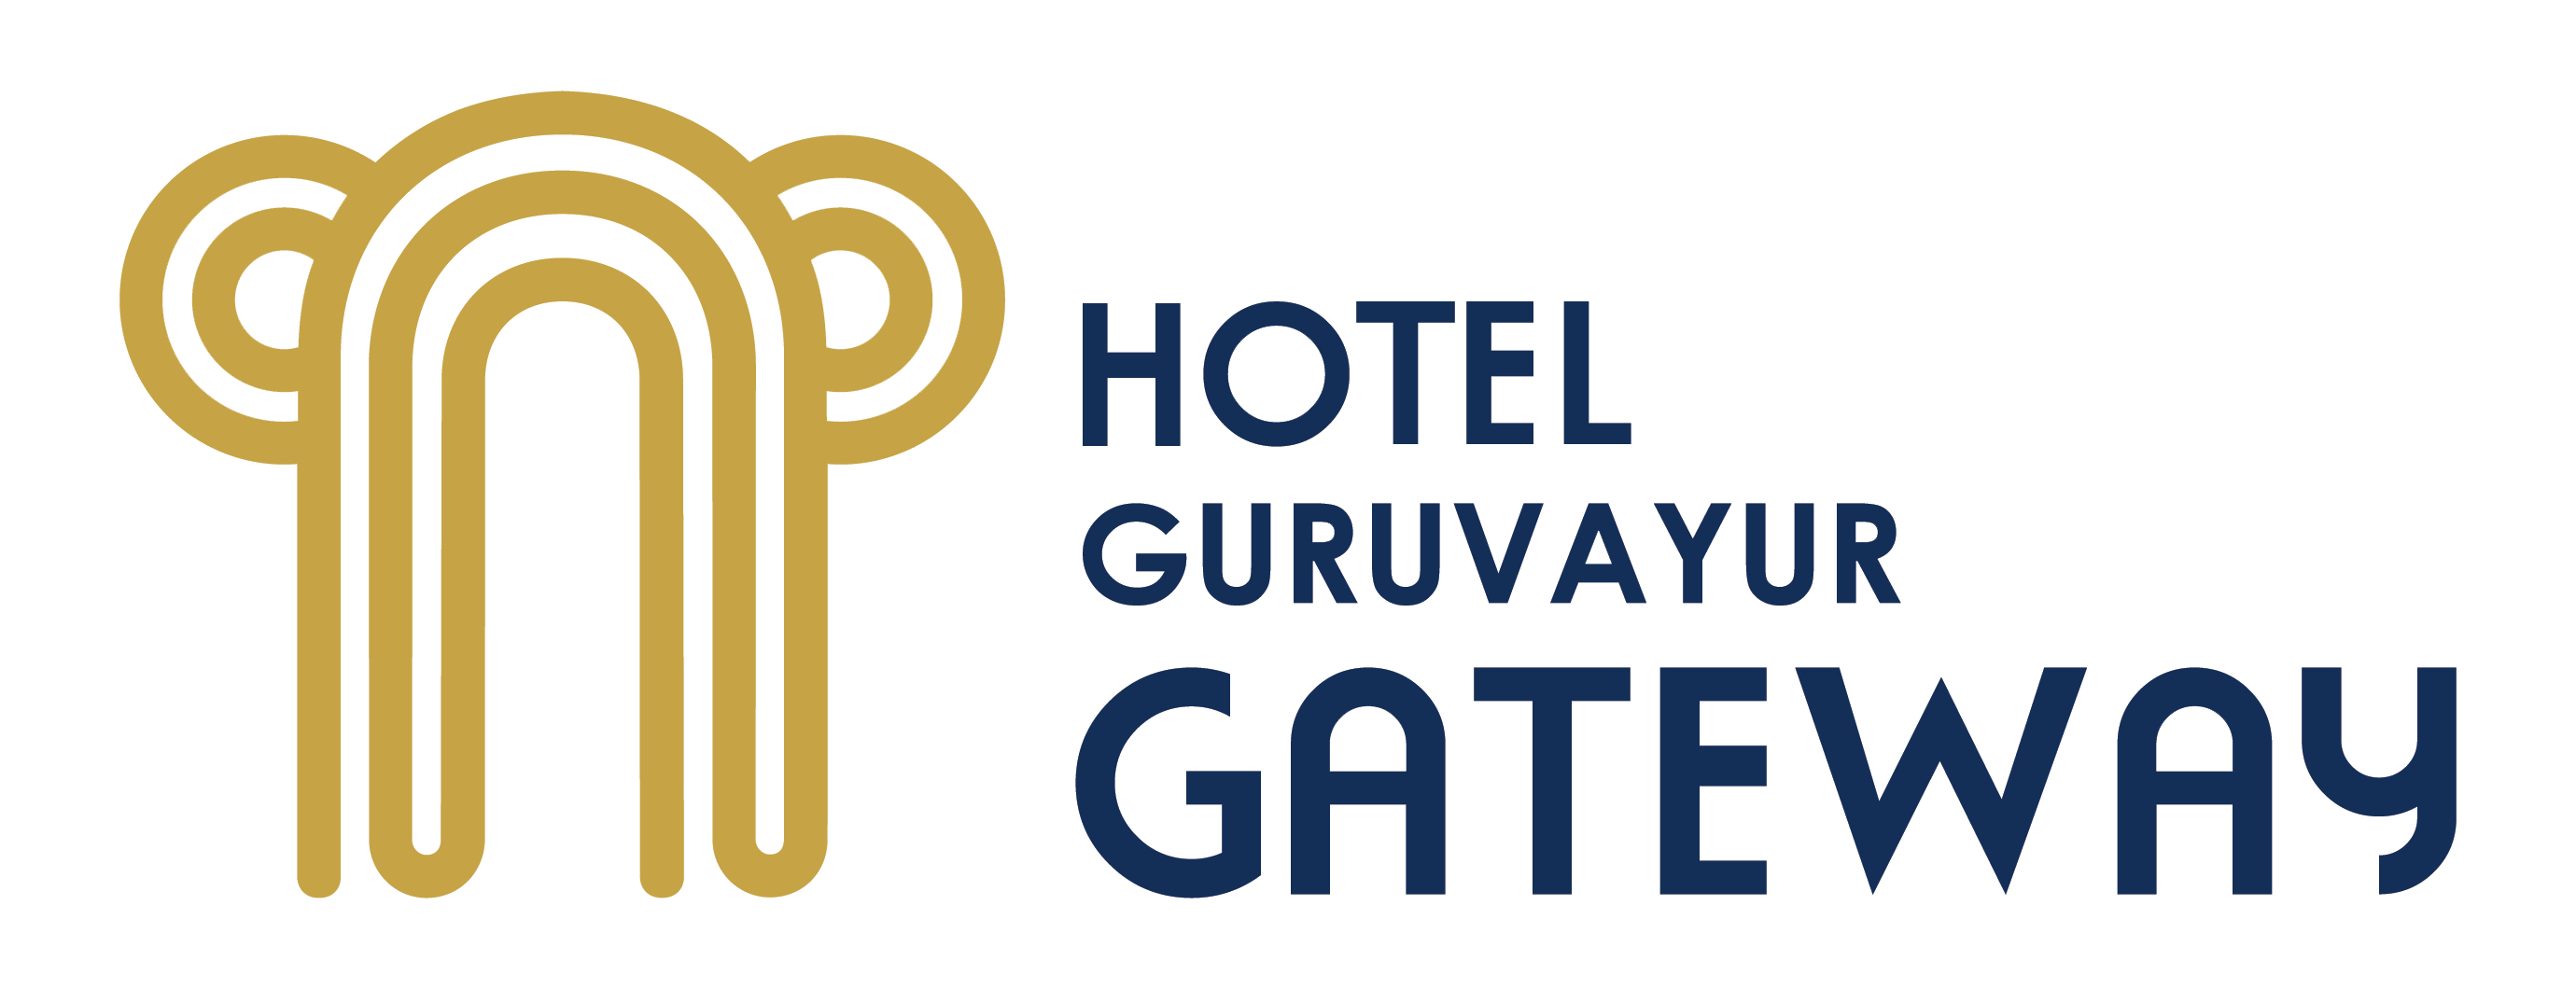 Gateway Hotels Logo - Best Hotels in Guruvayur | Budget Hotels In Guruvayur Near Temple ...